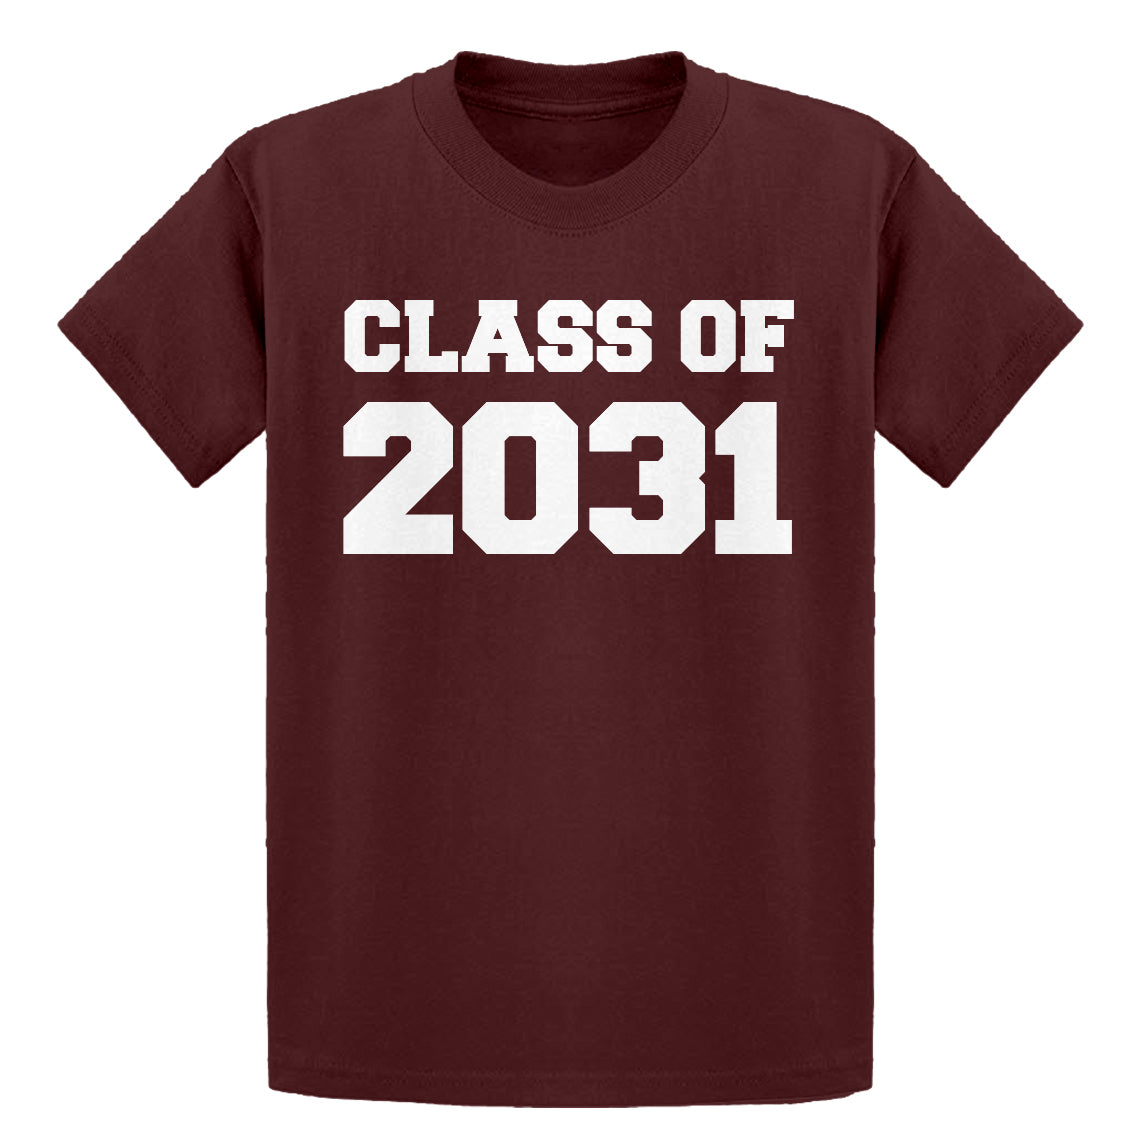 Youth Class of 2031 Kids T-shirt